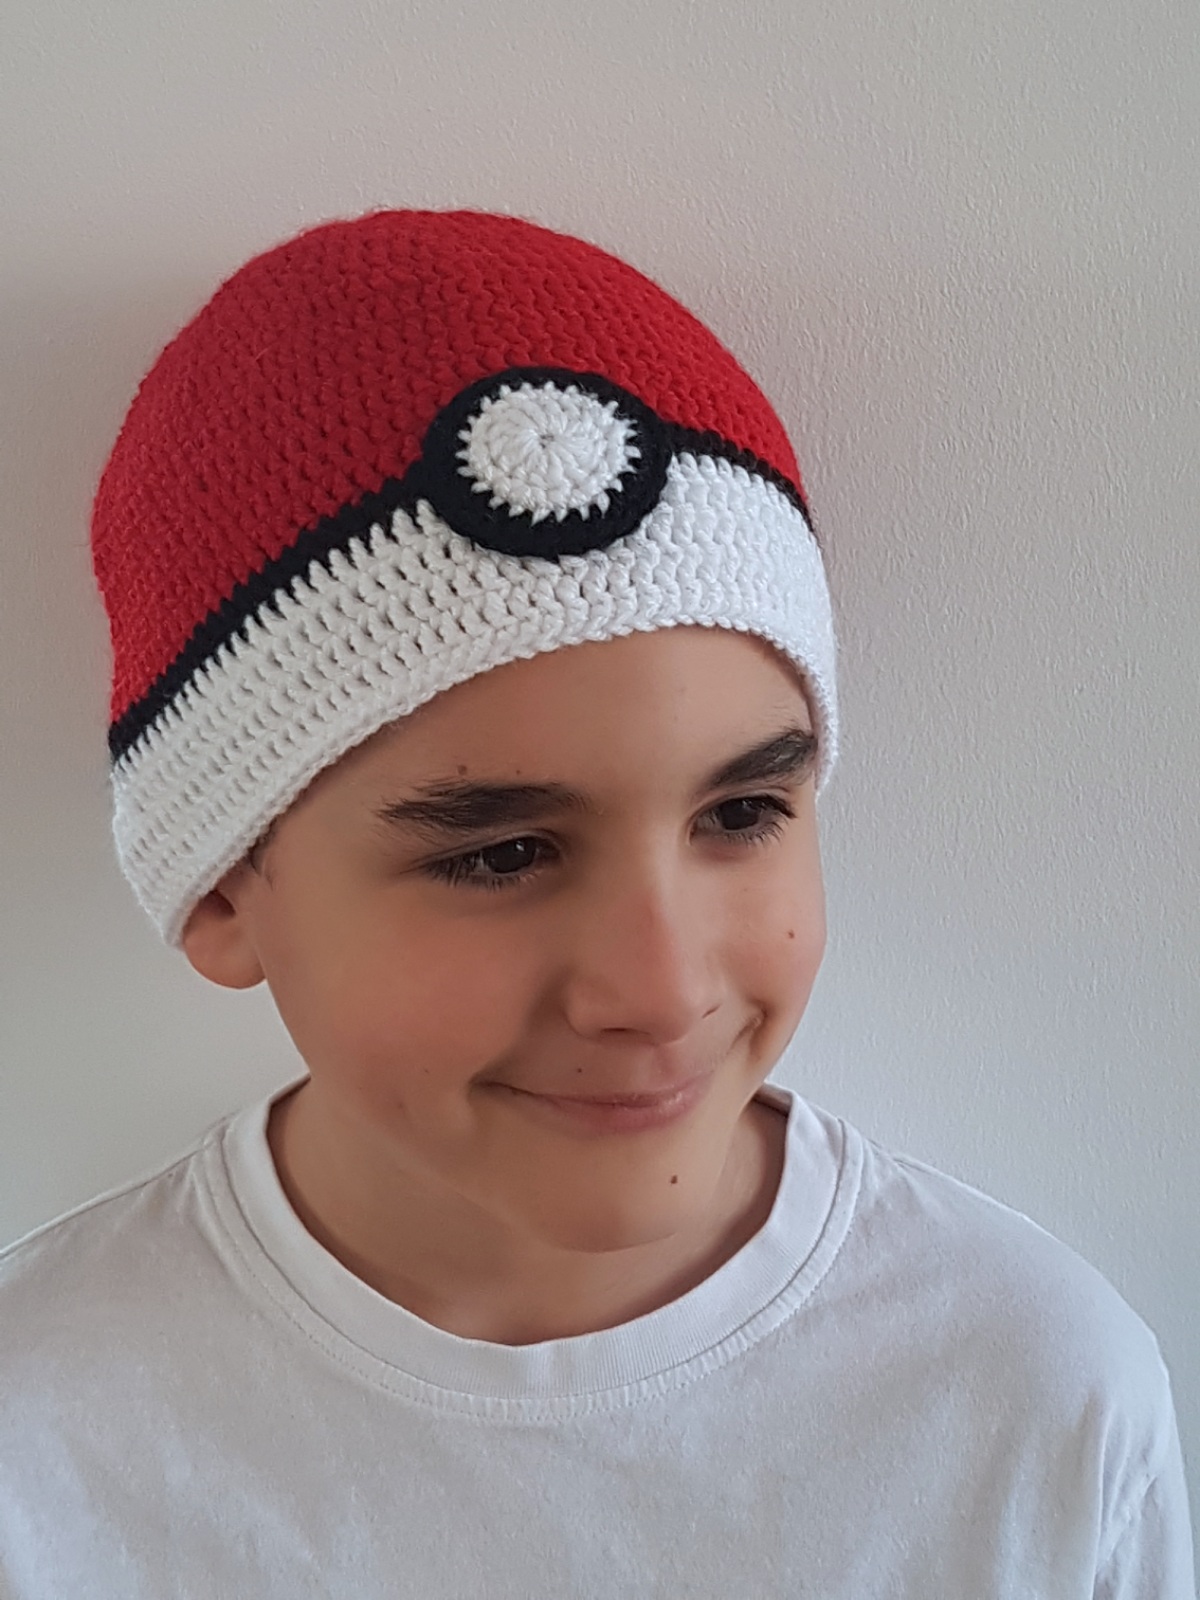 Pokeball Crochet Hat